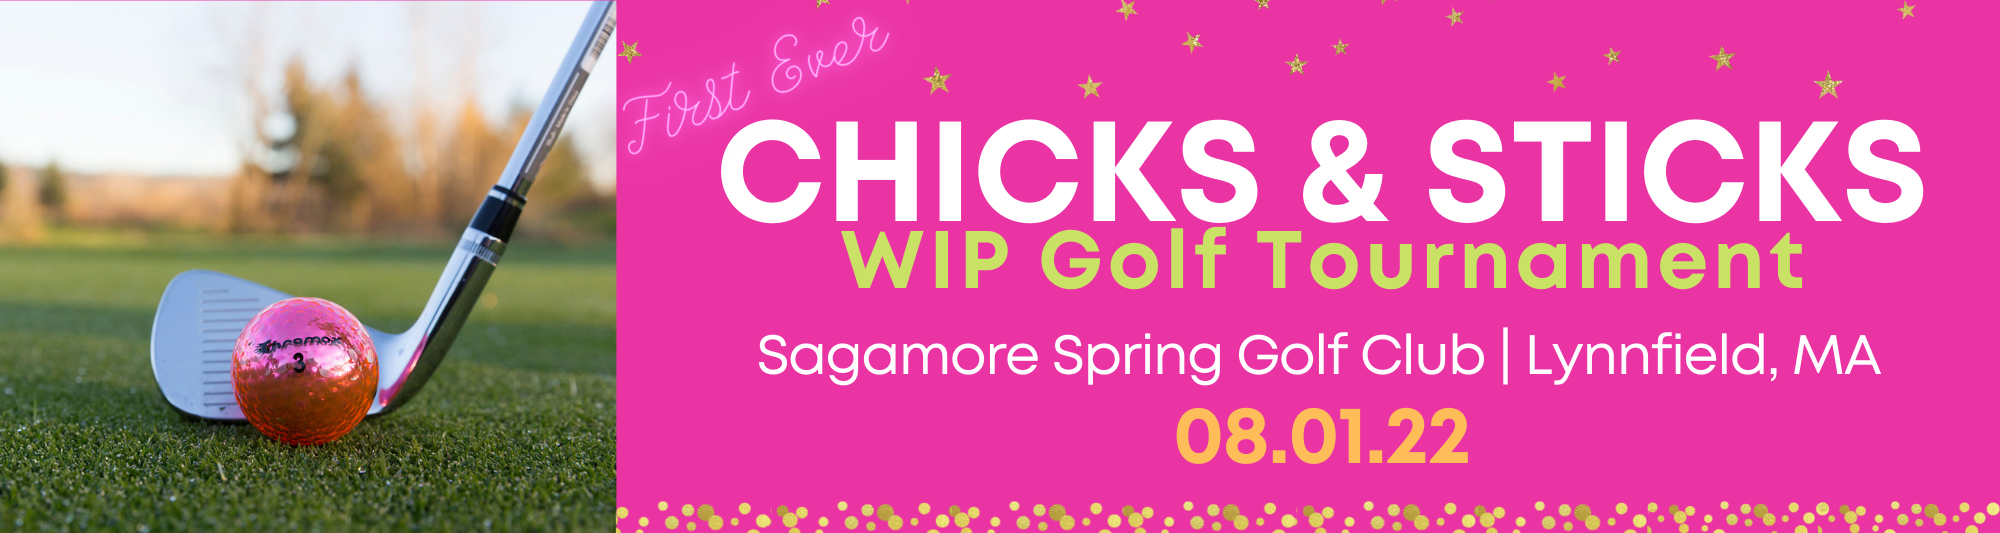 WIP Chicks & Sticks Golf Tournament